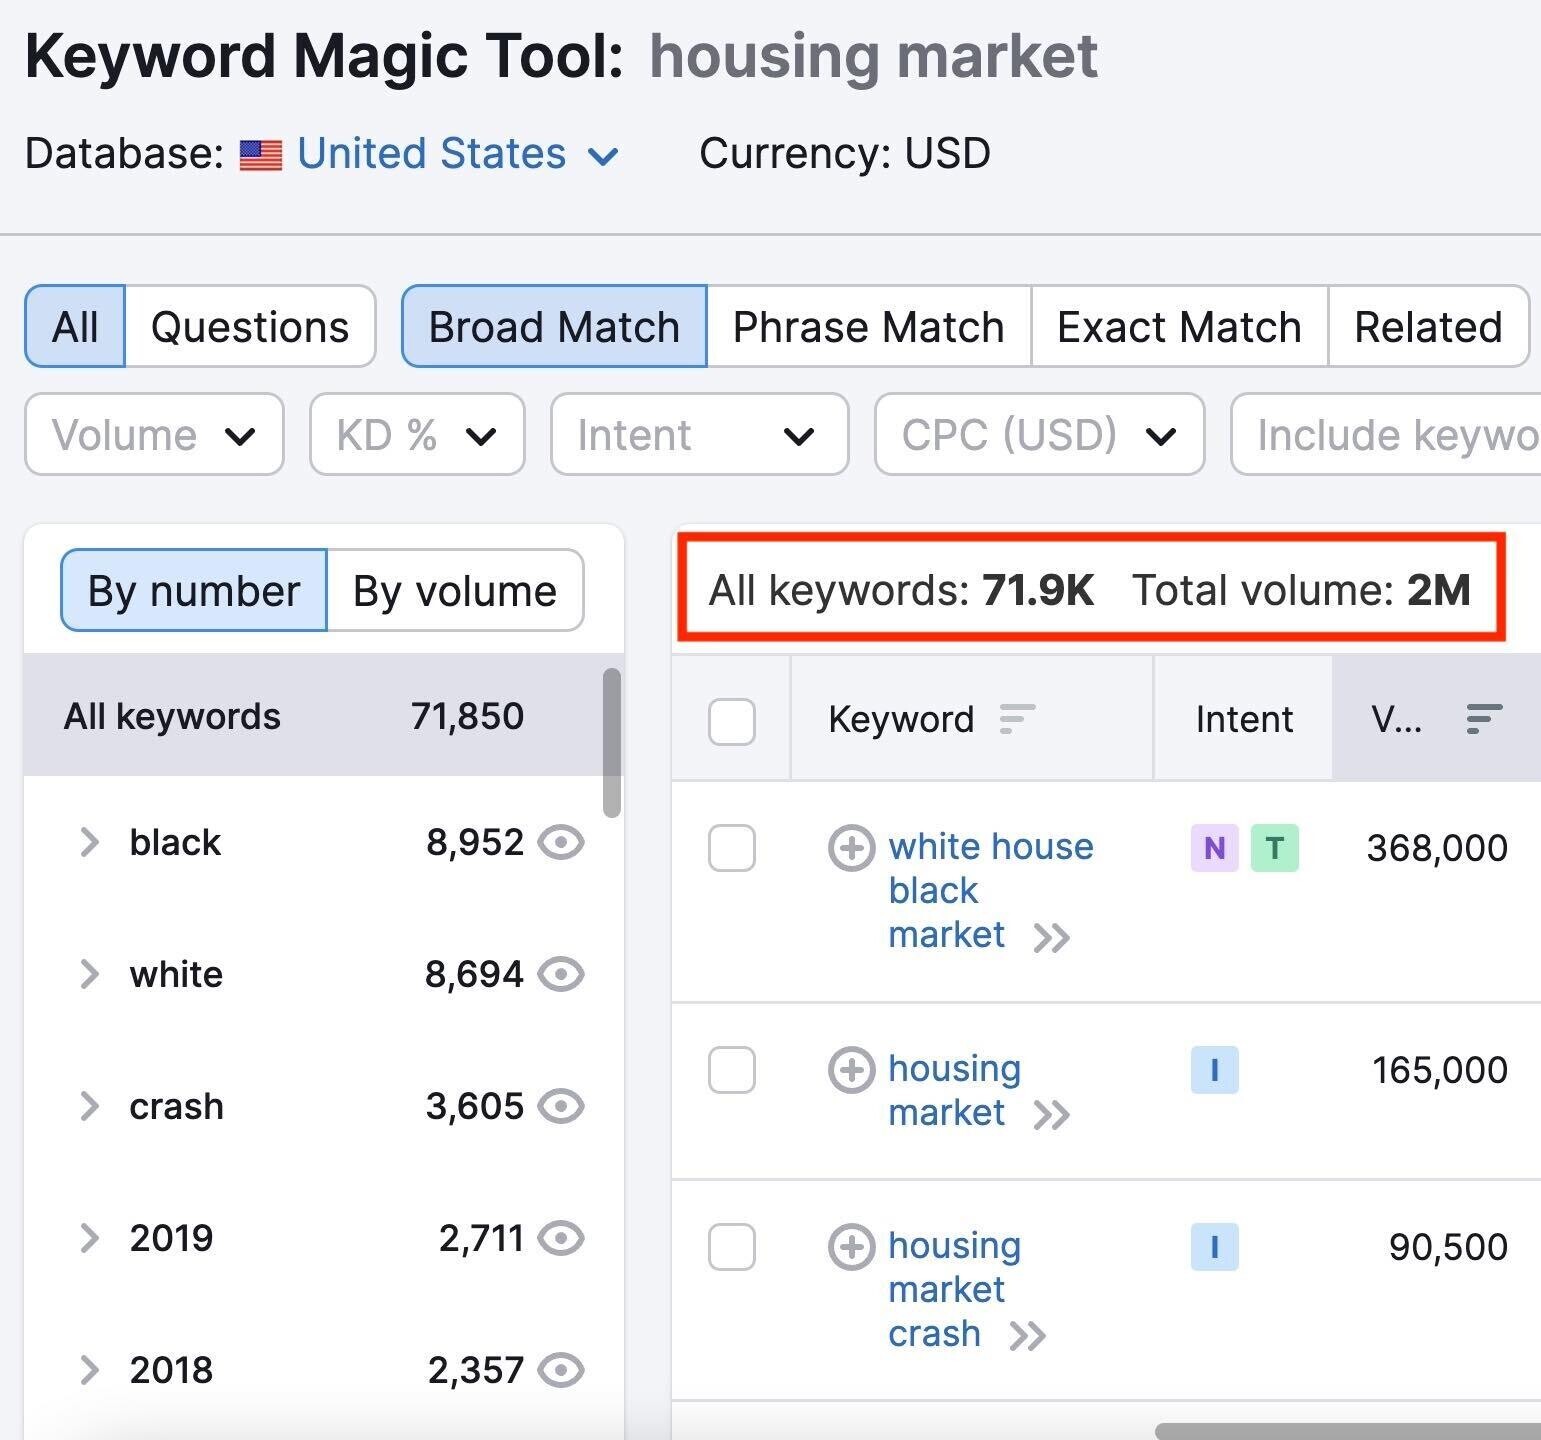 List of 71.9K keywords in Keyword Magic Tool